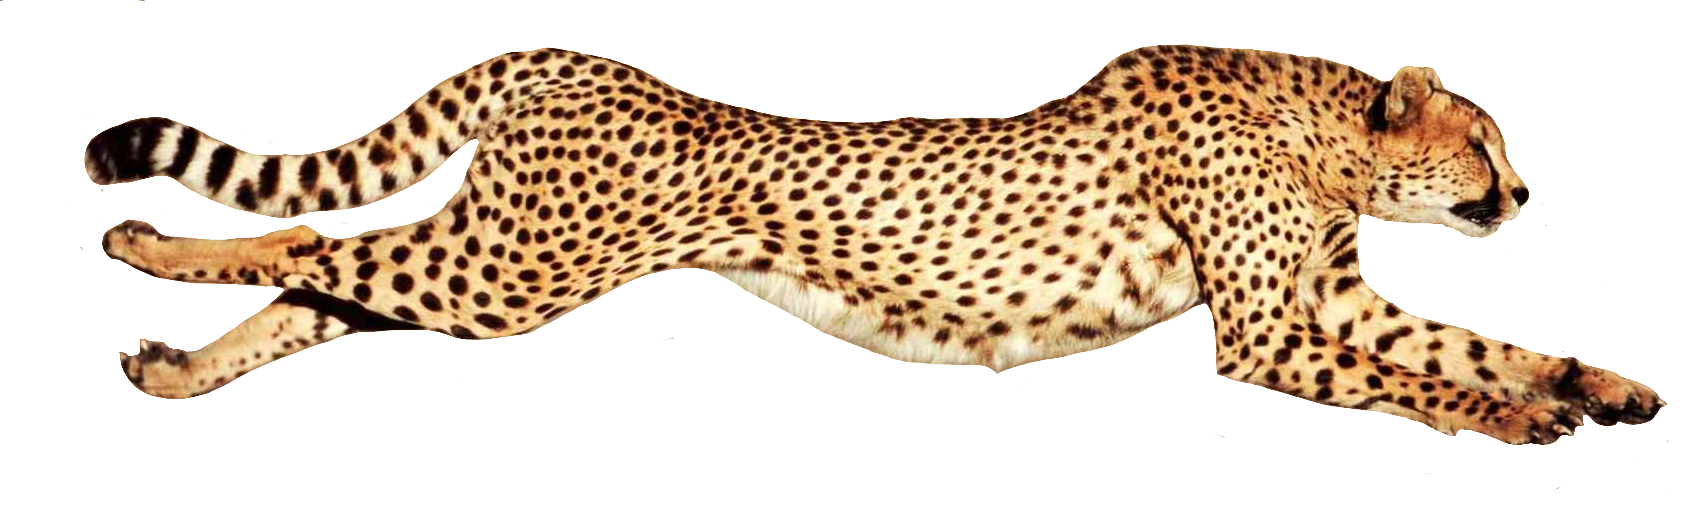 cheetah113